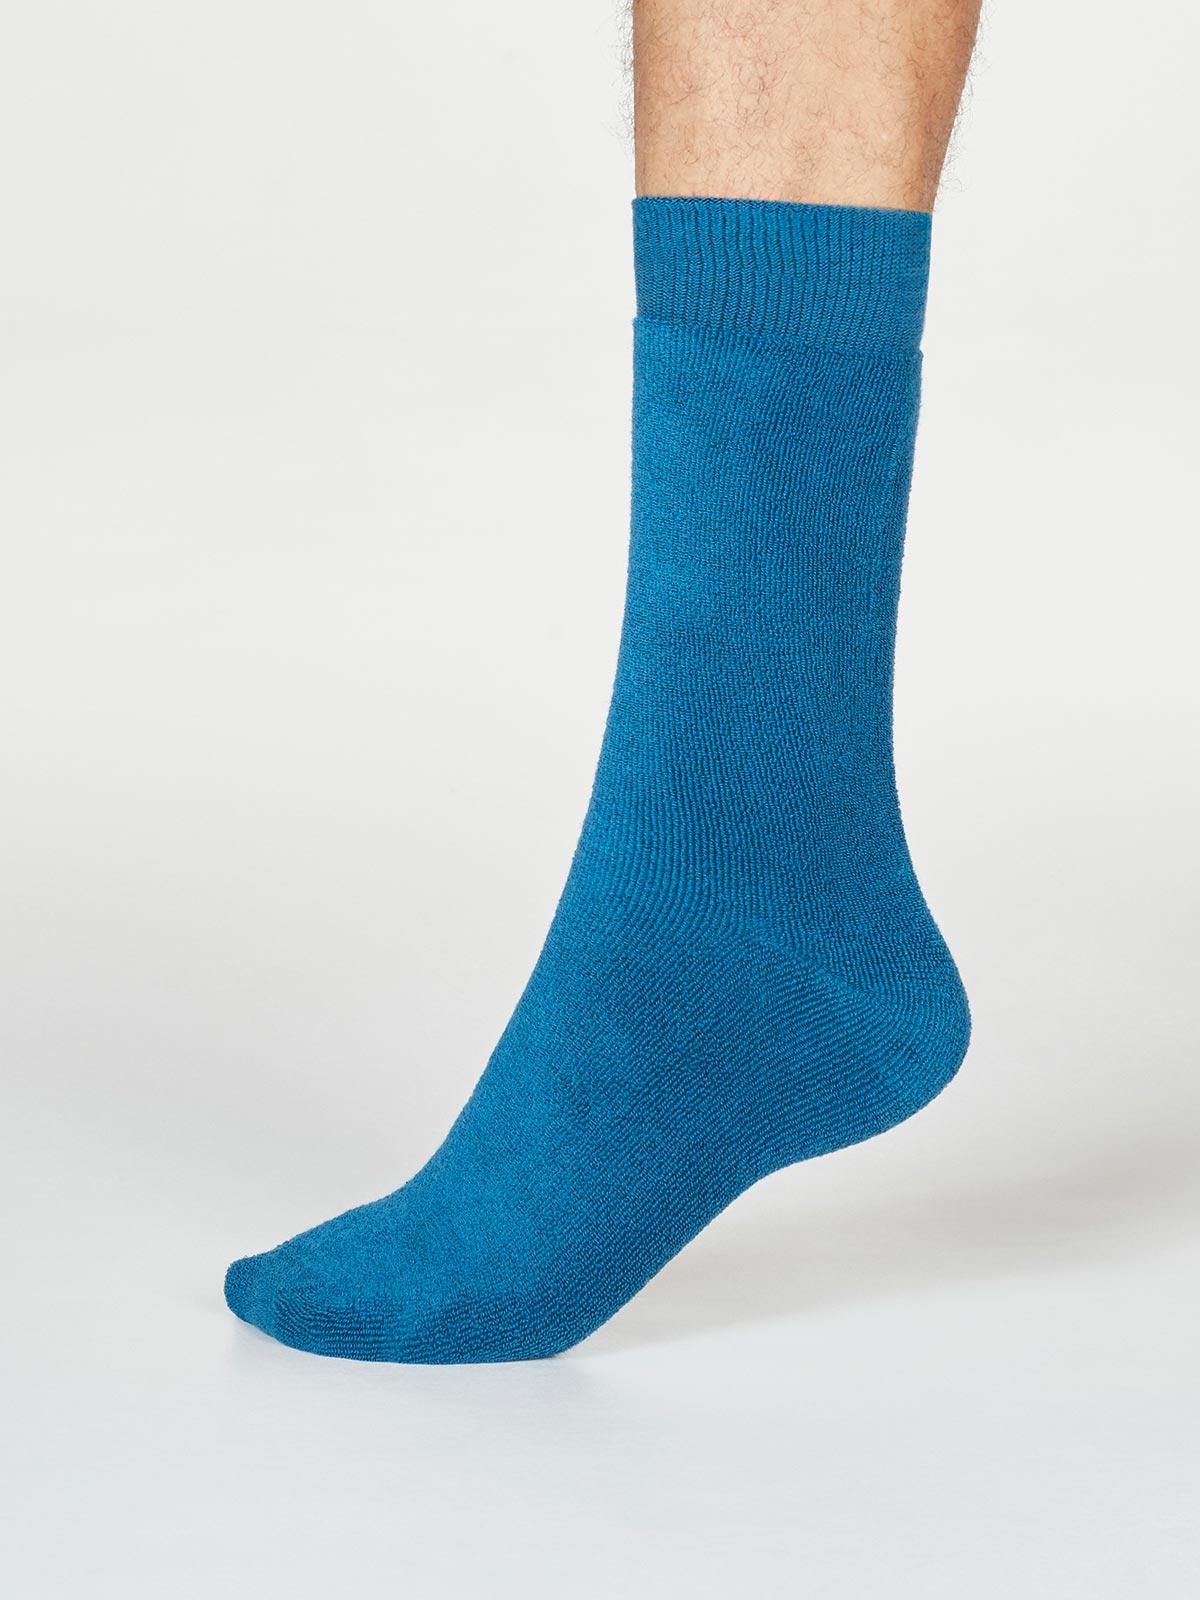 Walker Socks - Ink Blue - Thought Clothing UK